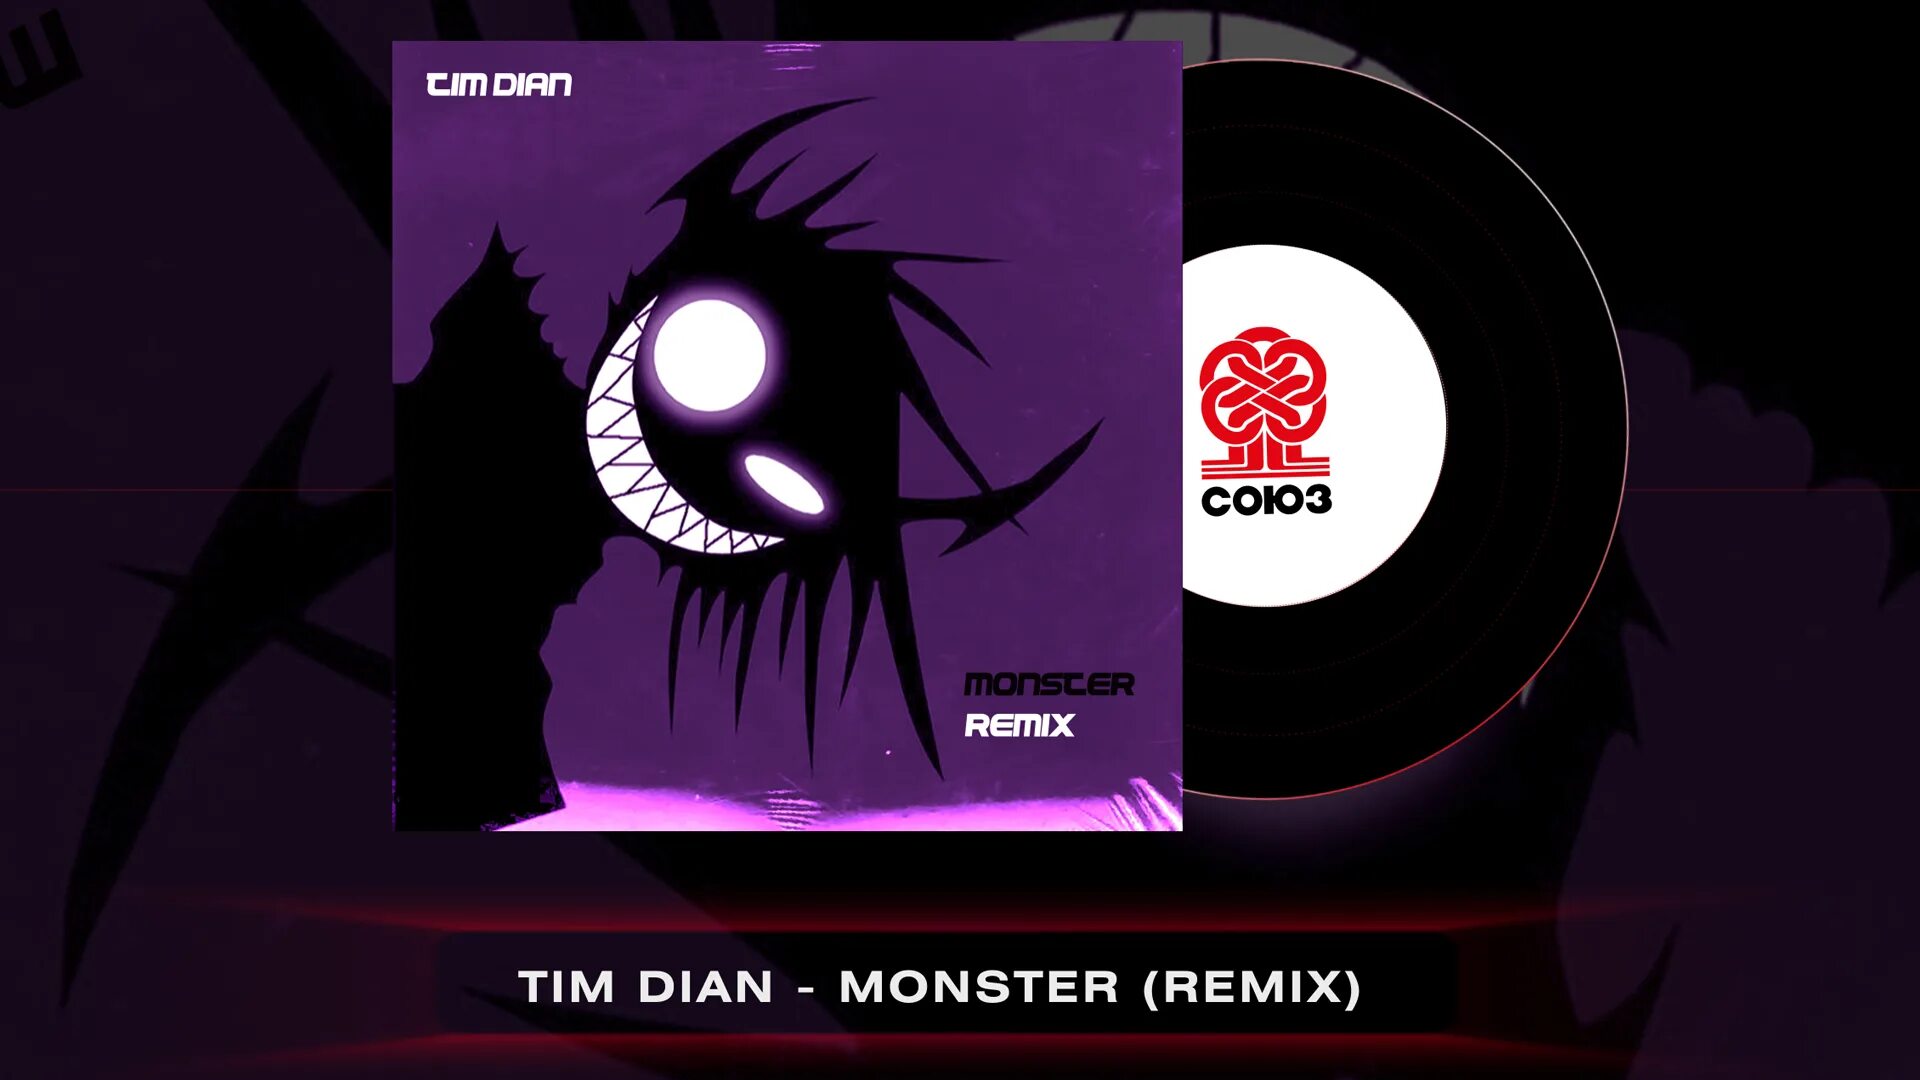 Tim Dian Monster. Monster Remix. Drink me down tim Dian. In the end tim Dian.